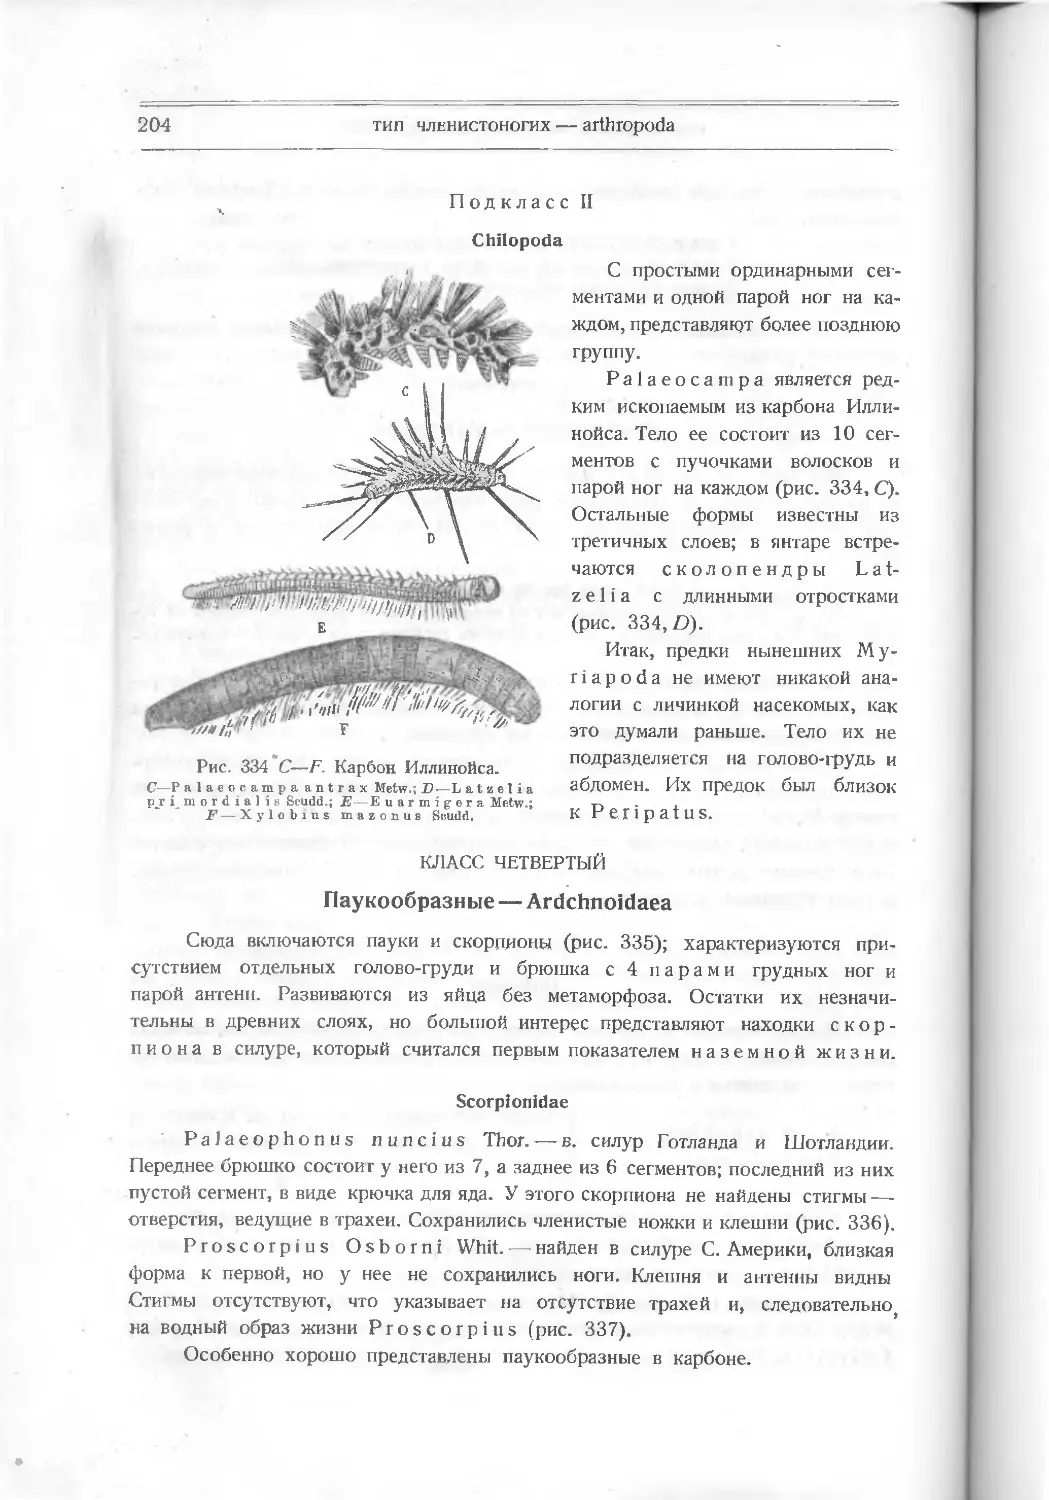 Подкласс II. Chilopoda
Класс четвёртый. Паукообразные – Arachnoidaea